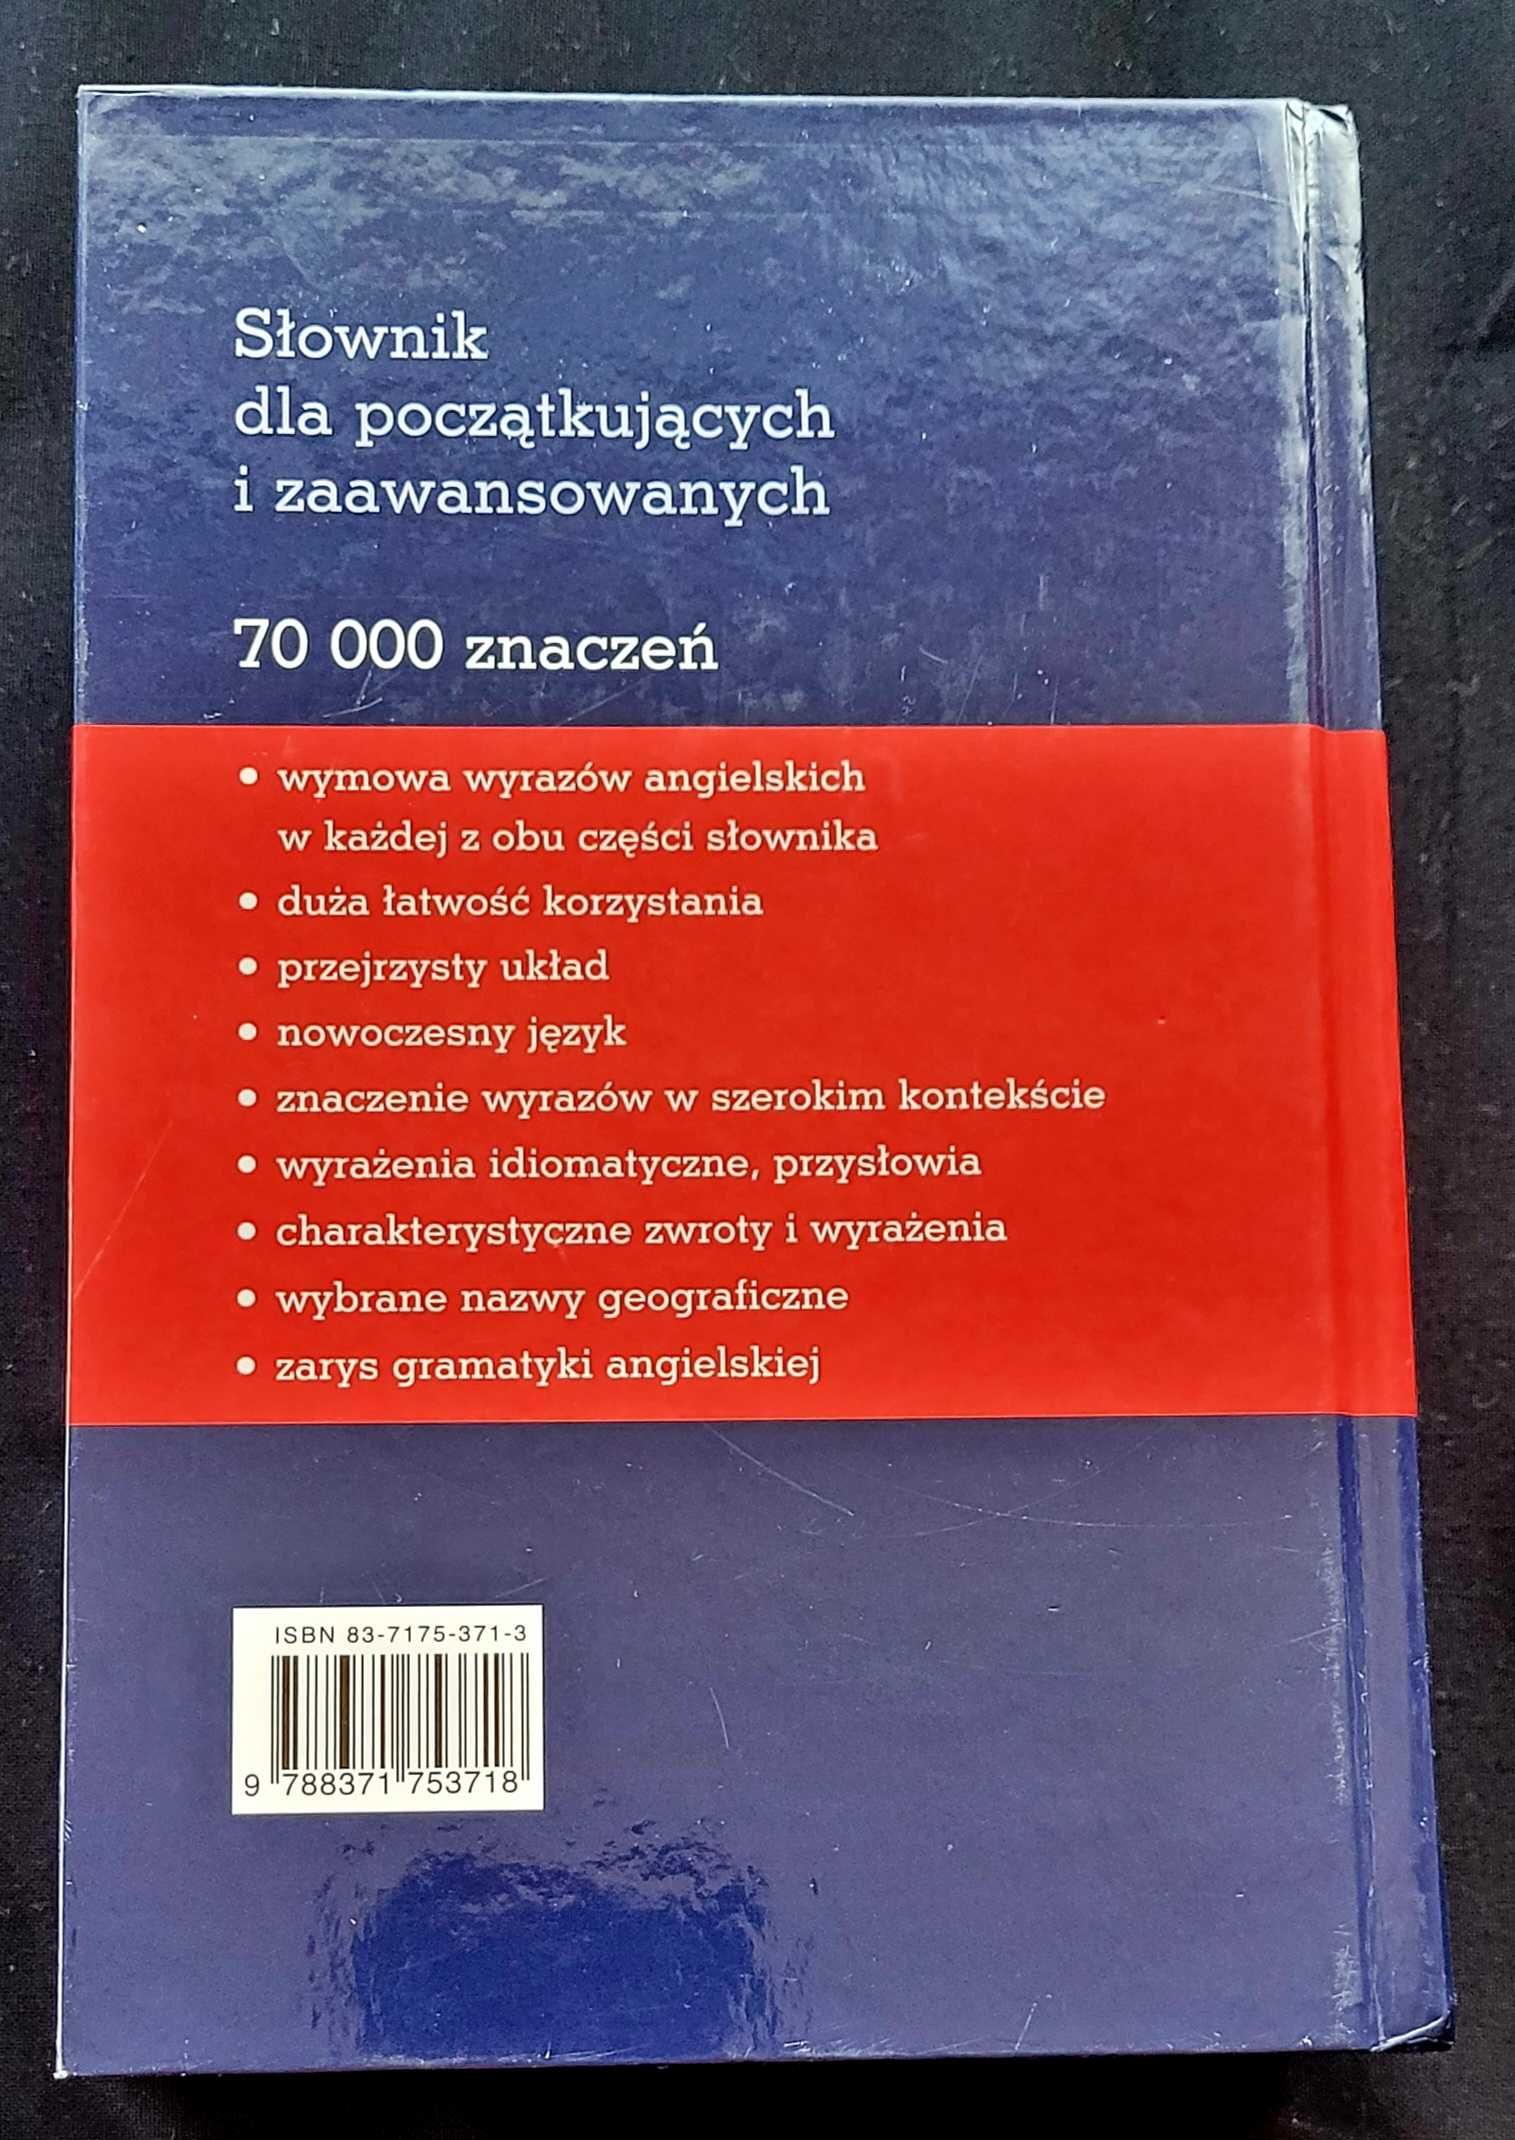 Słownik ang-pol/pol-ang i gramatyka/Delta 70 tyś. znaczeń